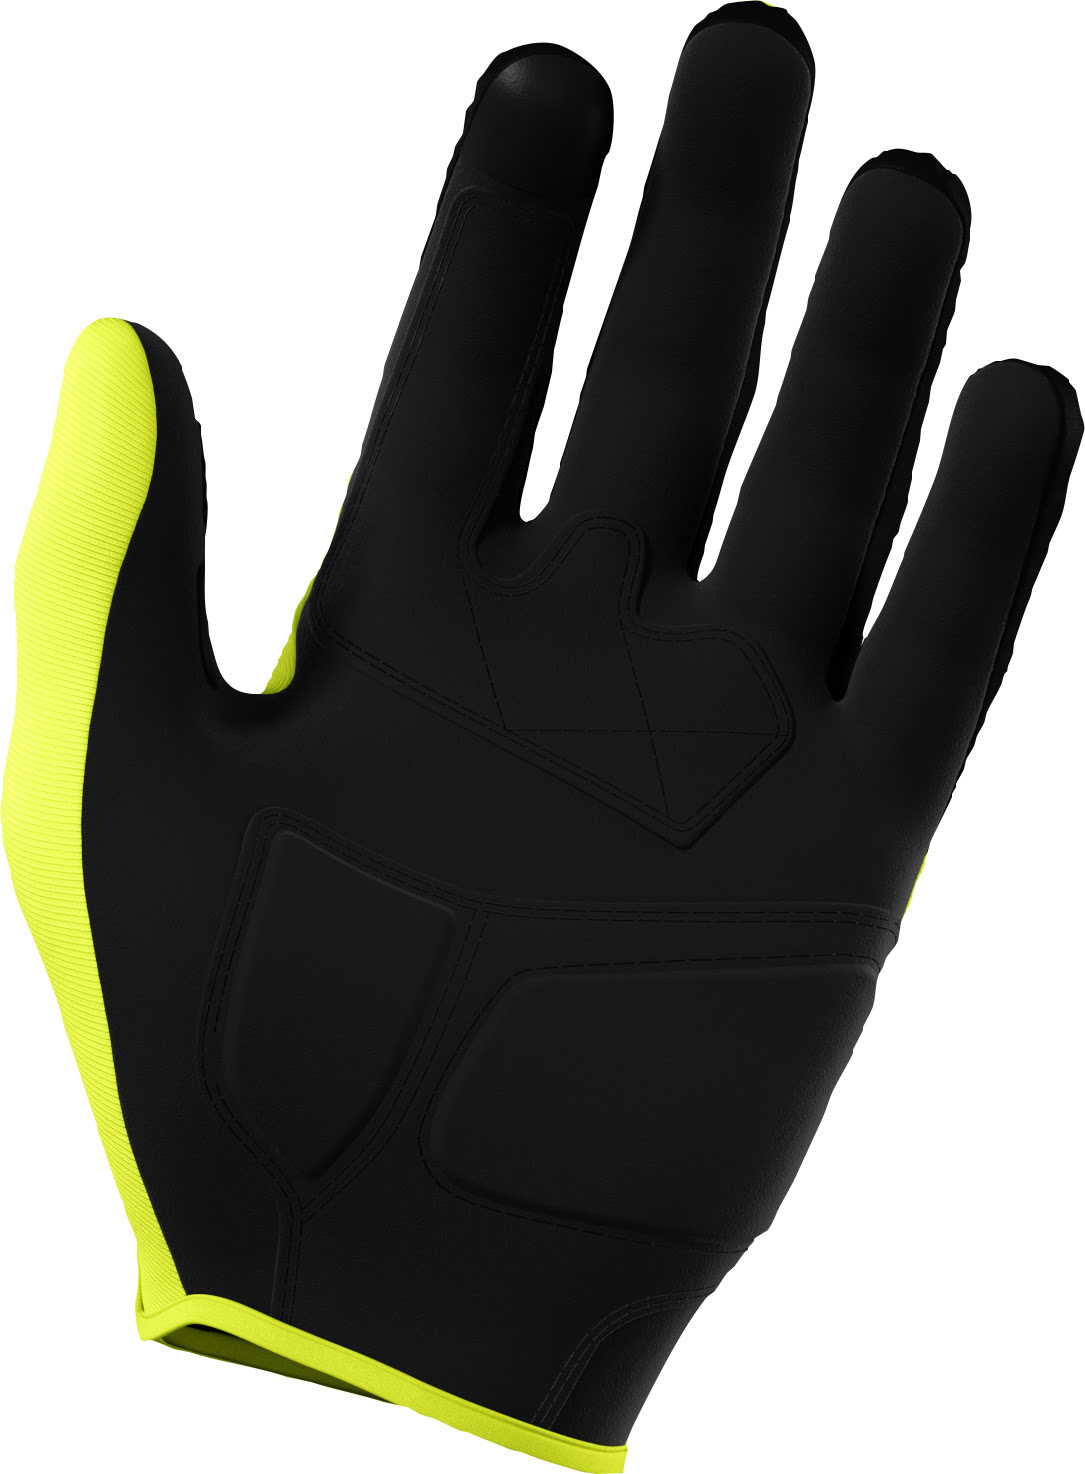 Gloves VISION Neon Yellow SHOT 